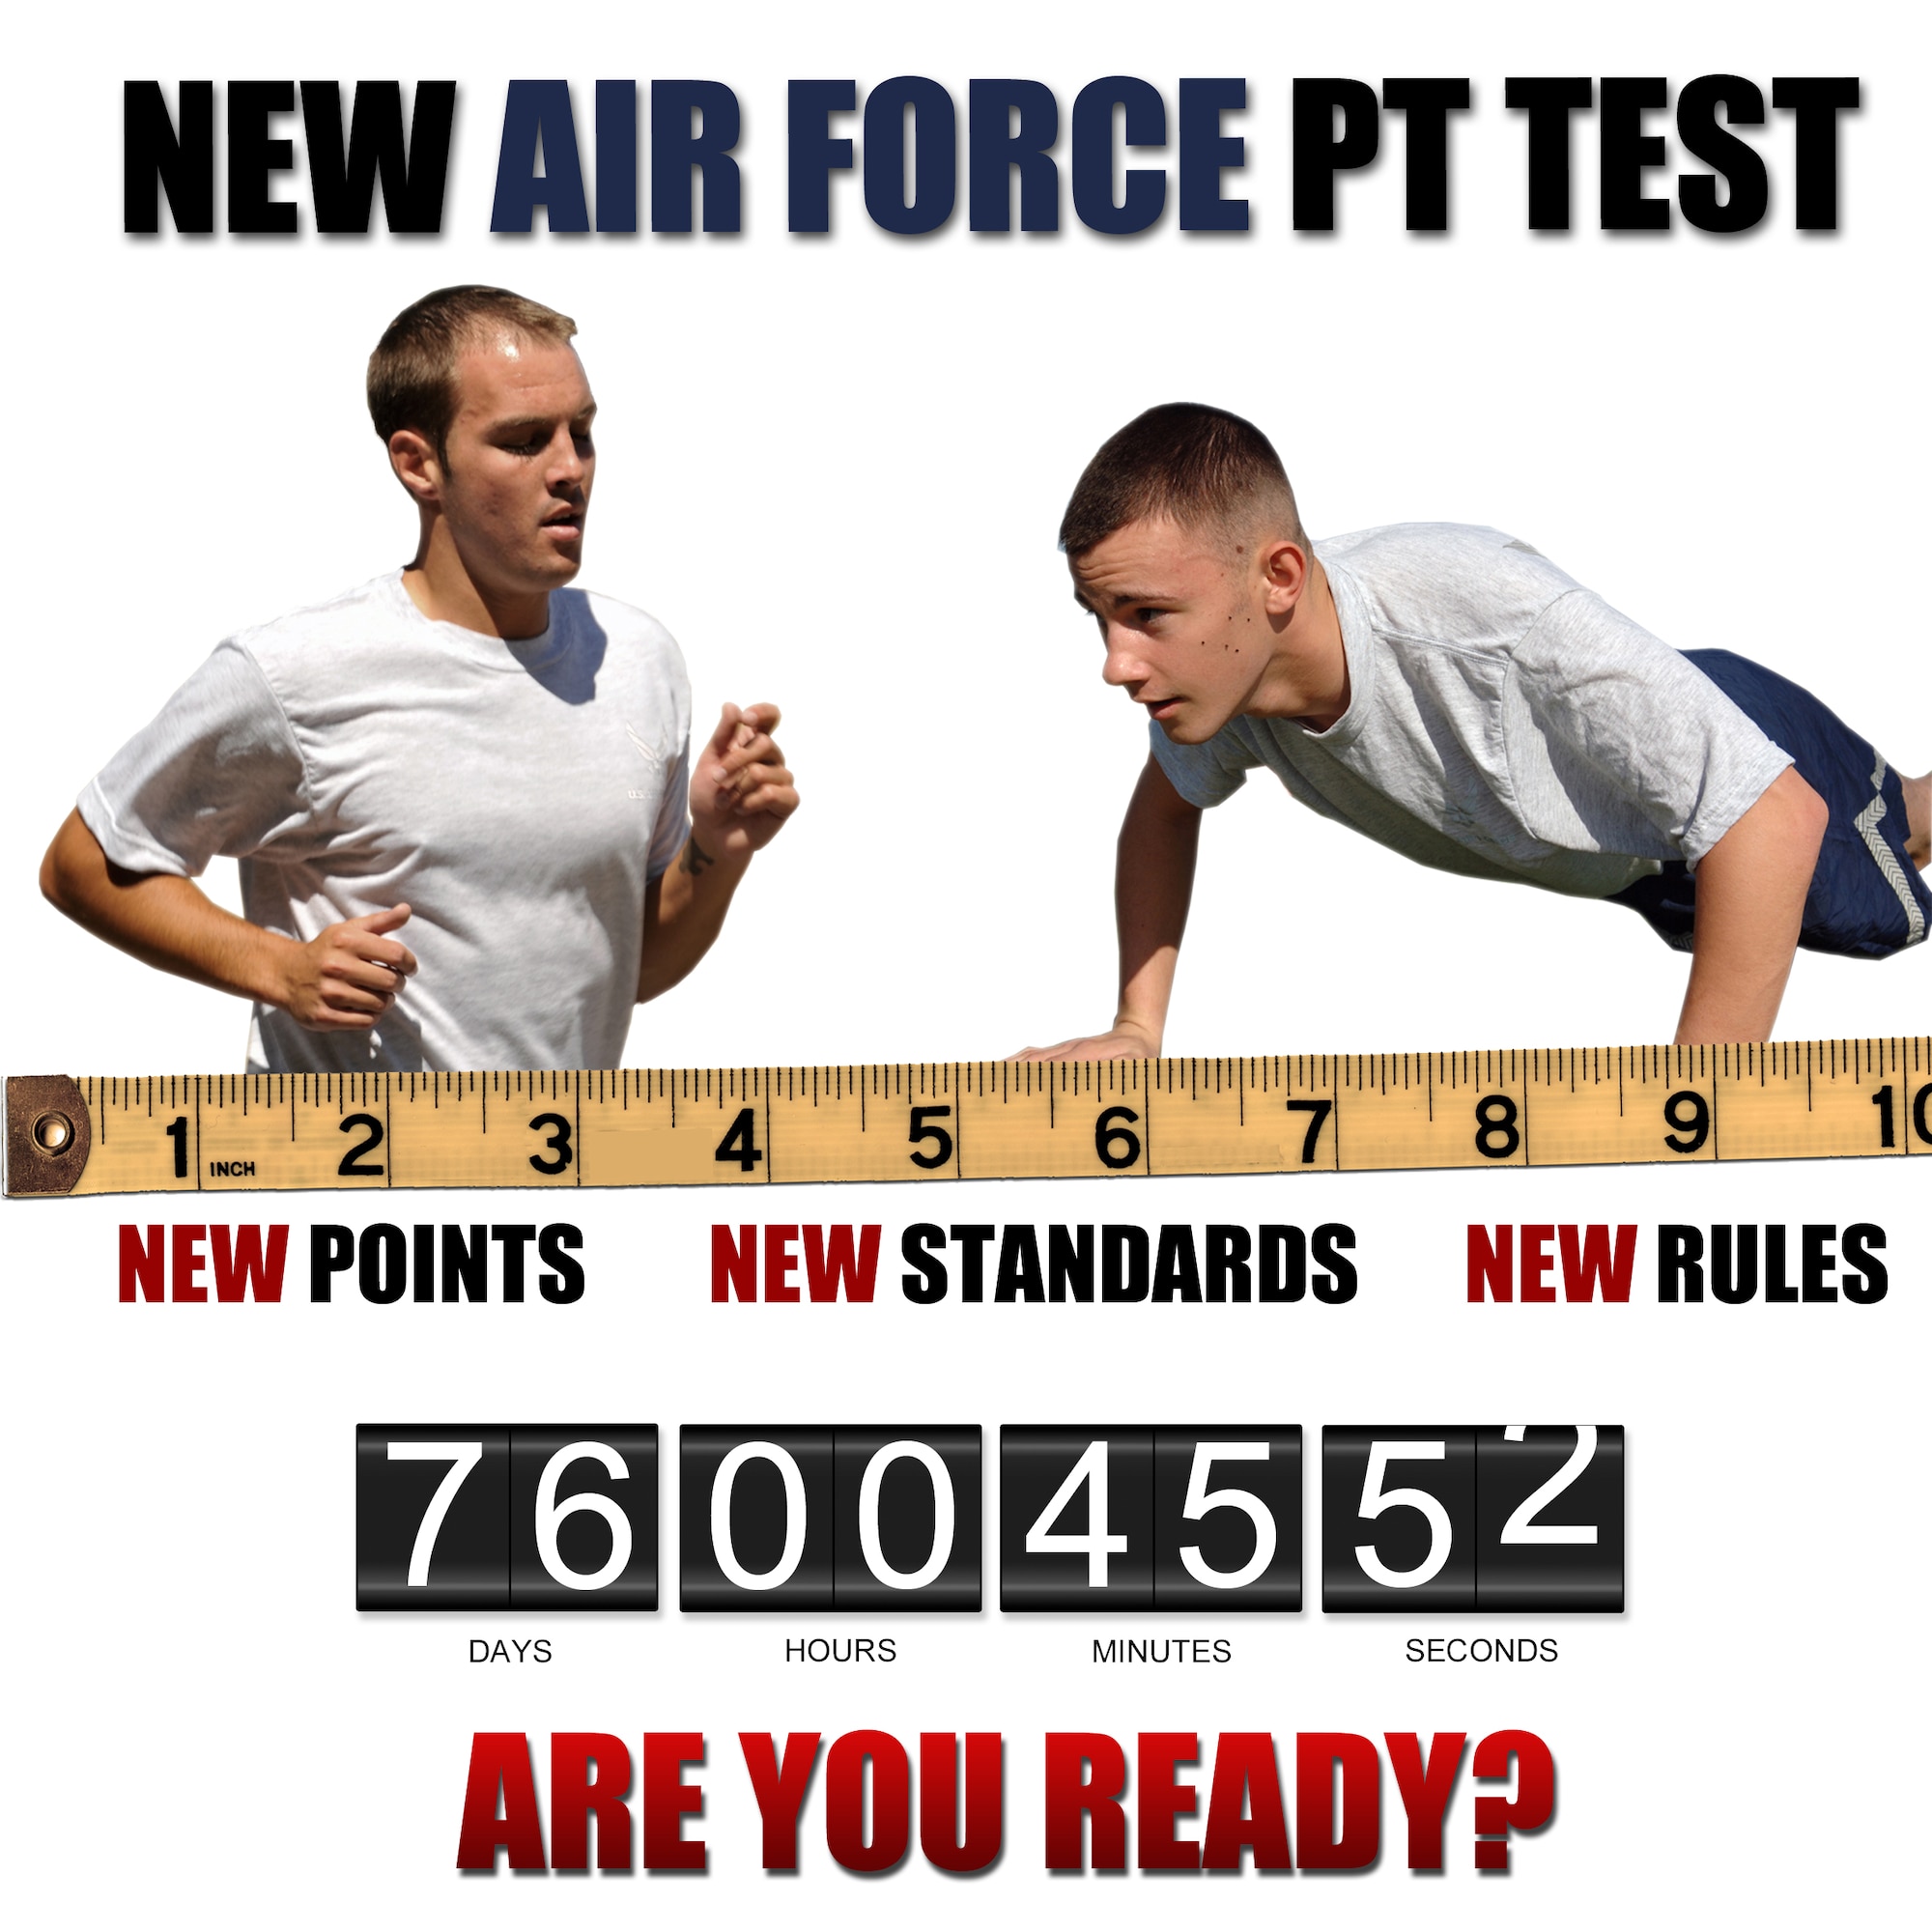 New Air Forcewide PT standards start July 1 > Scott Air Force Base